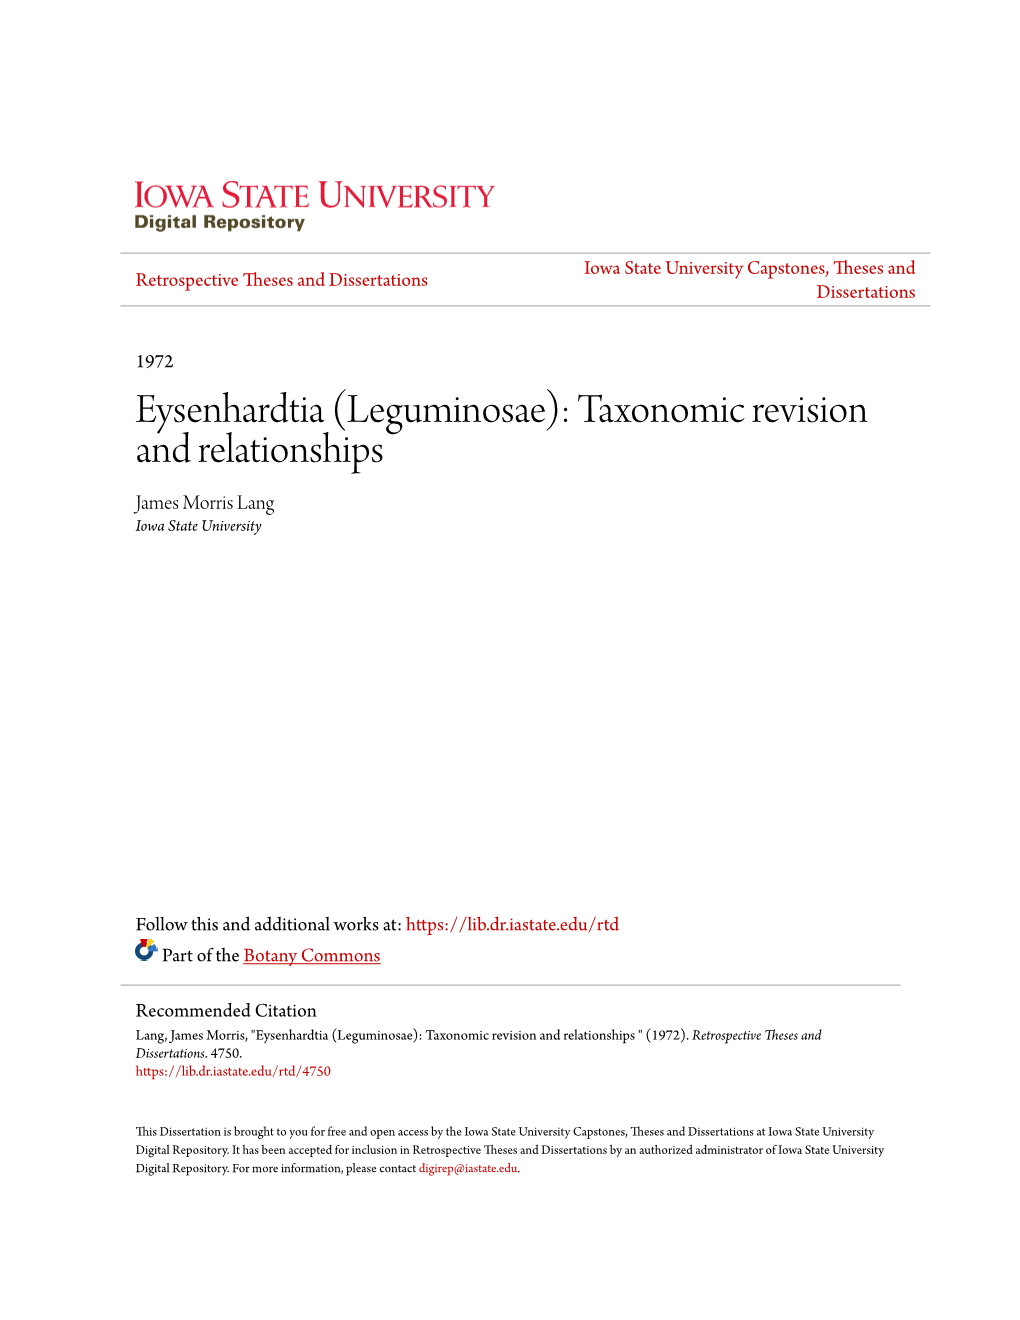 Eysenhardtia (Leguminosae): Taxonomic Revision and Relationships James Morris Lang Iowa State University